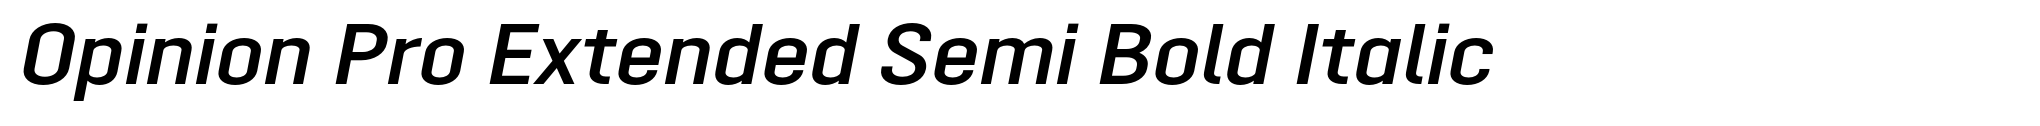 Opinion Pro Extended Semi Bold Italic image